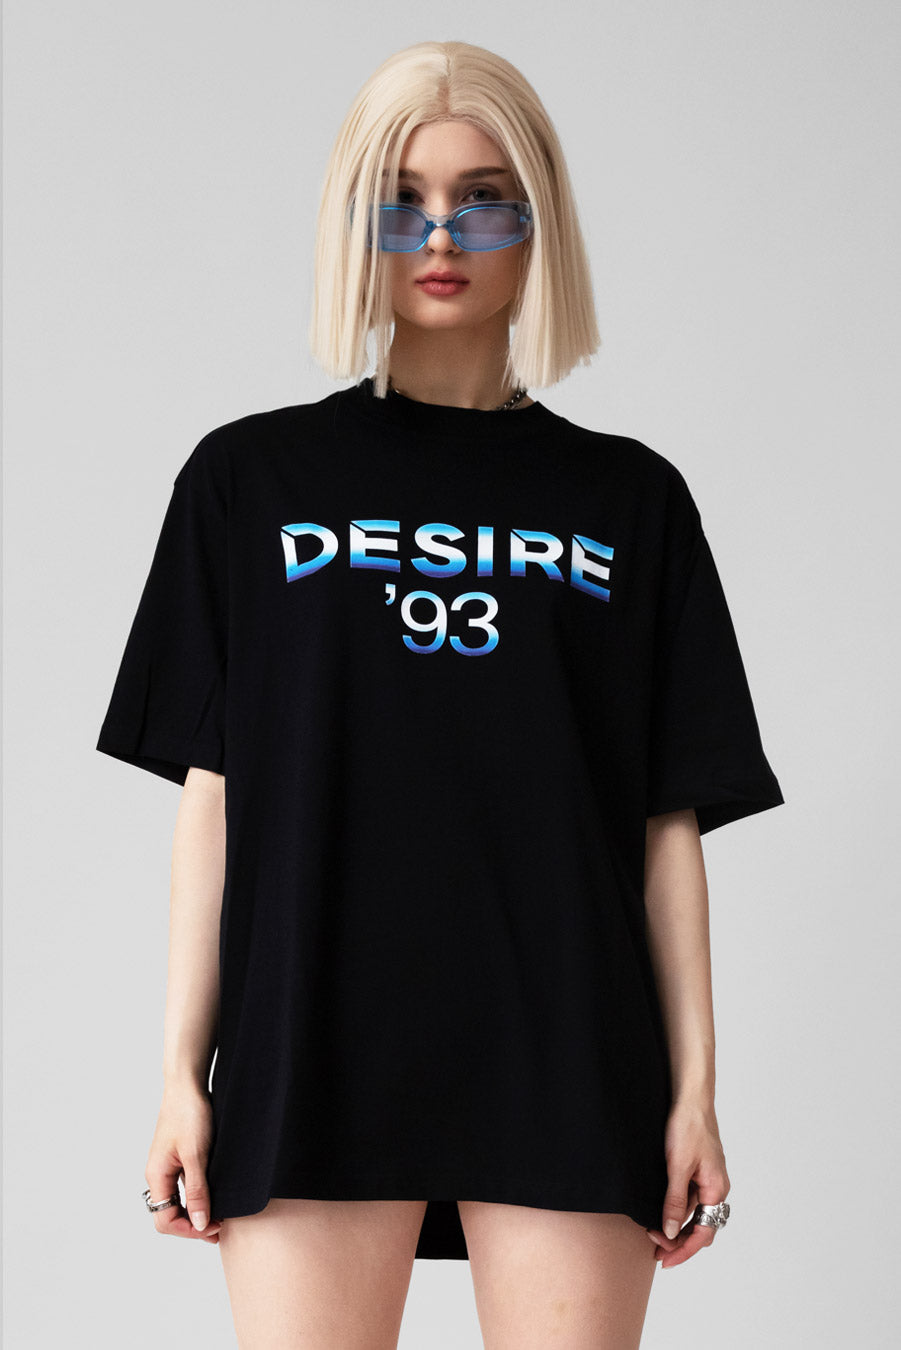 DESIRE 93 T shirt